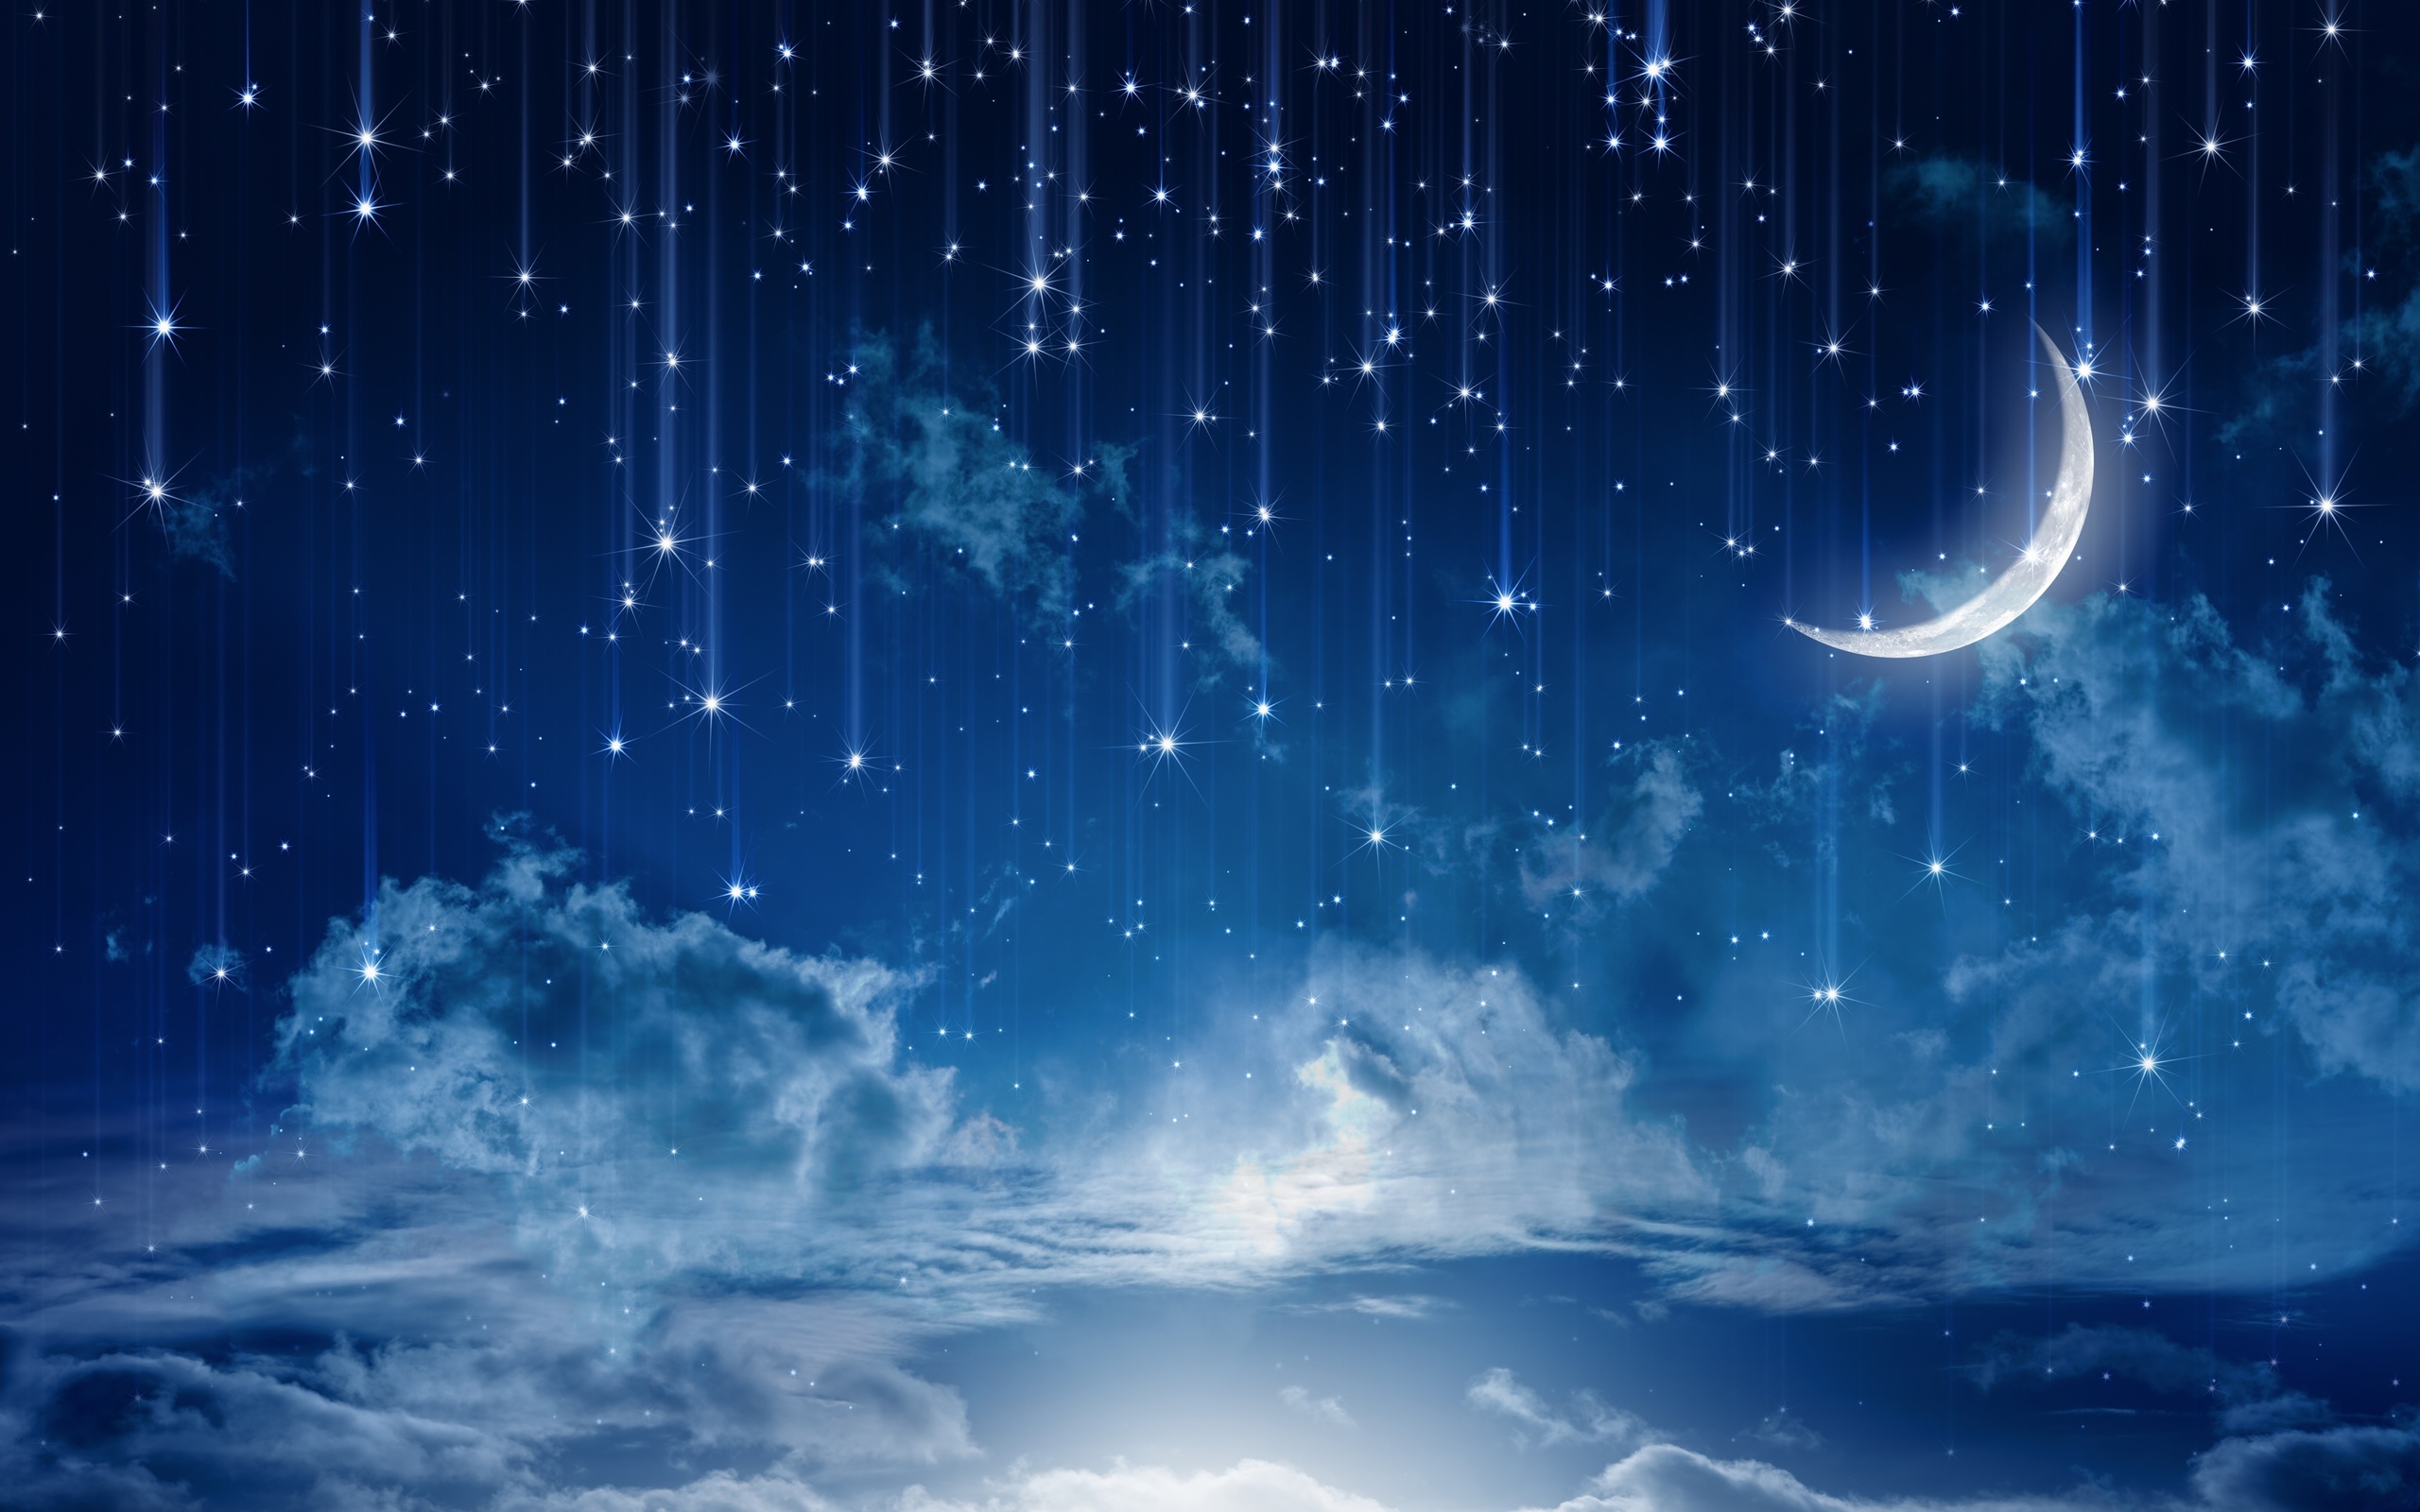  nature night stars clouds rain landscape moon wallpaper background